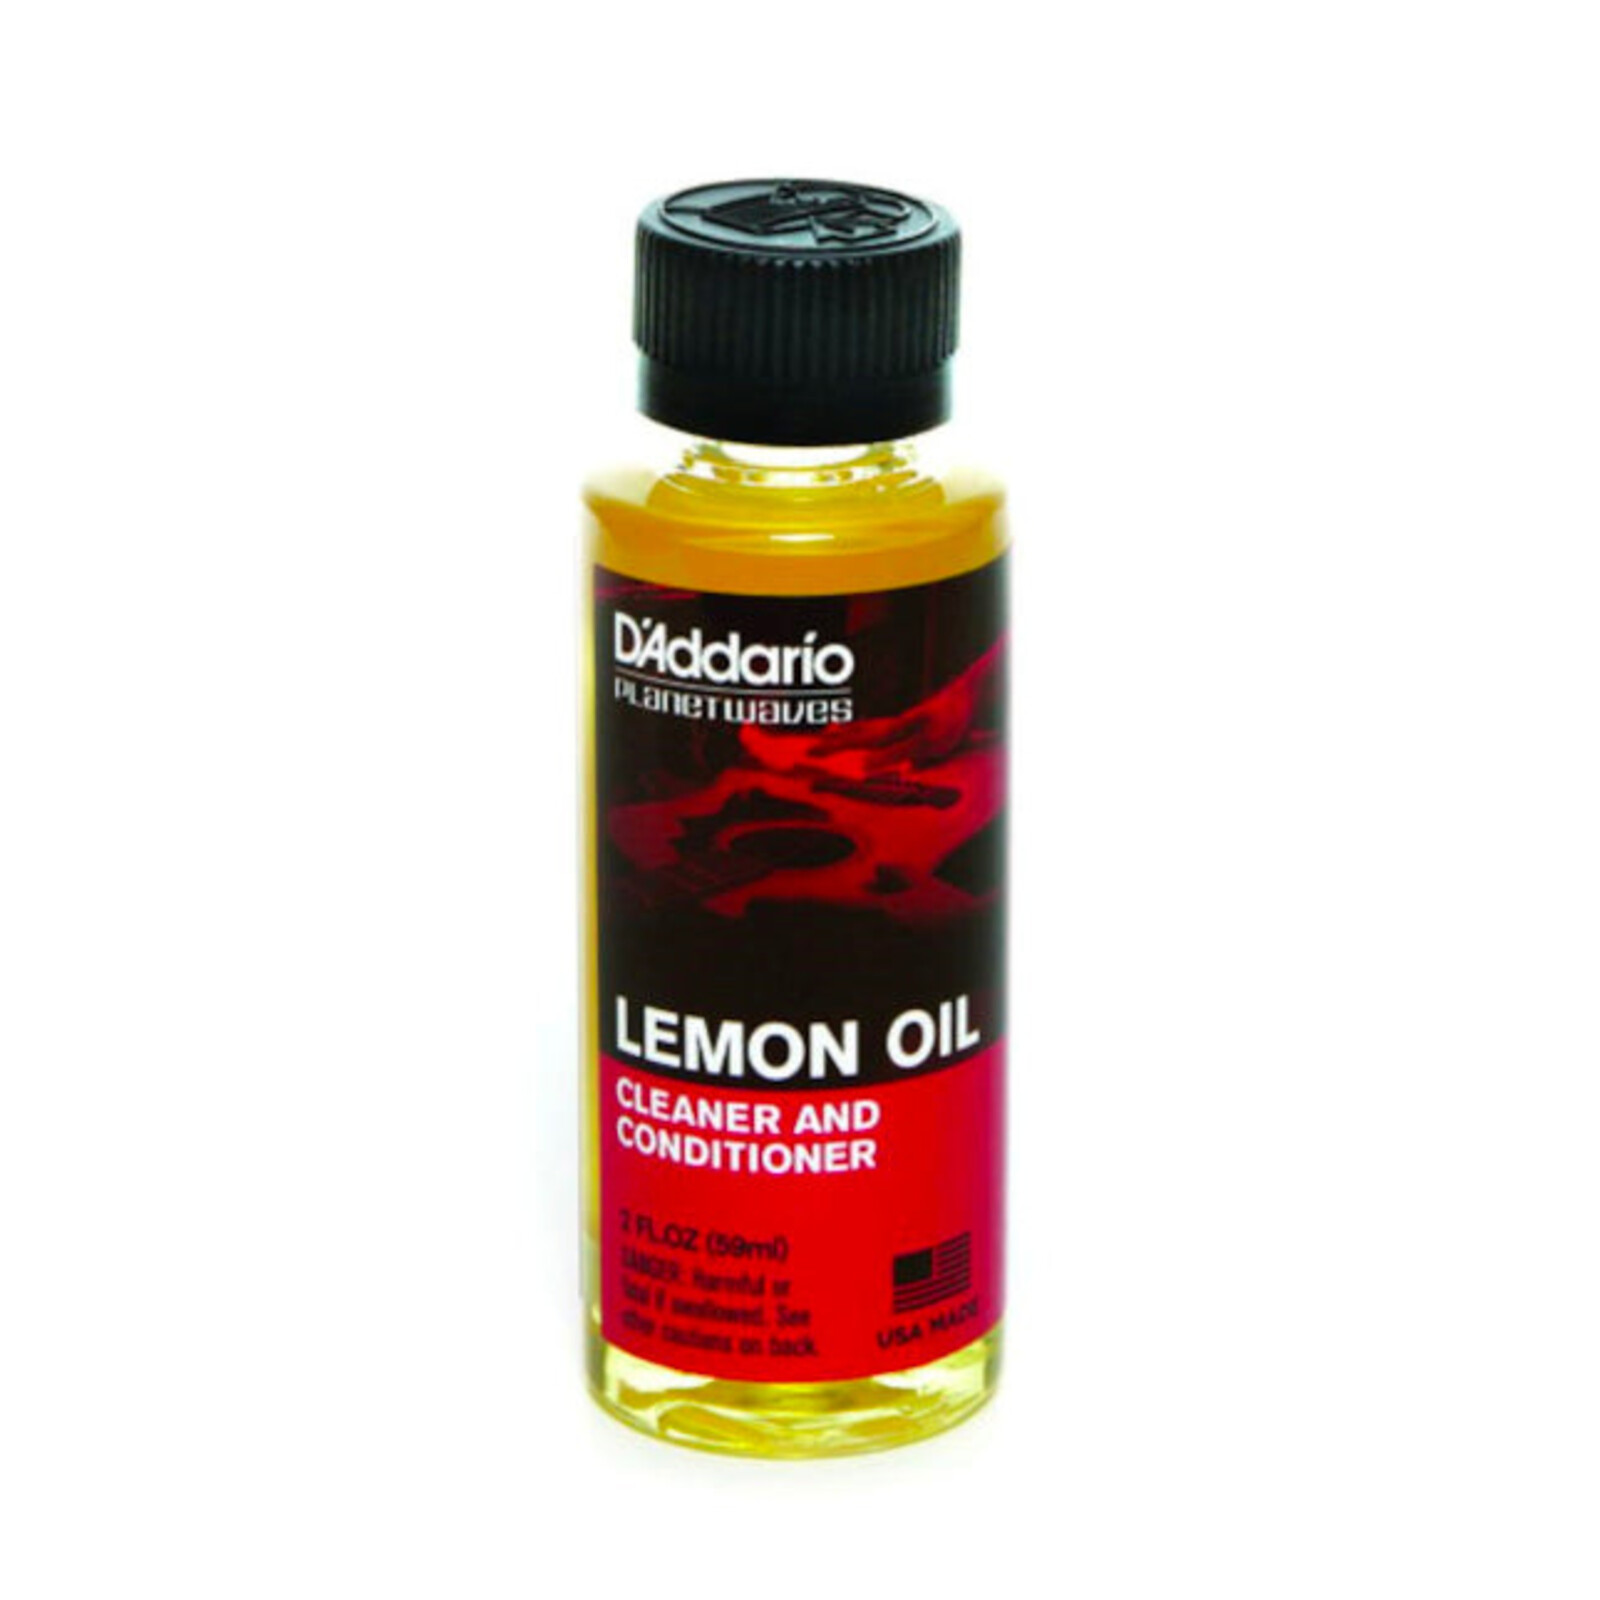 D'Addario Lemon oil